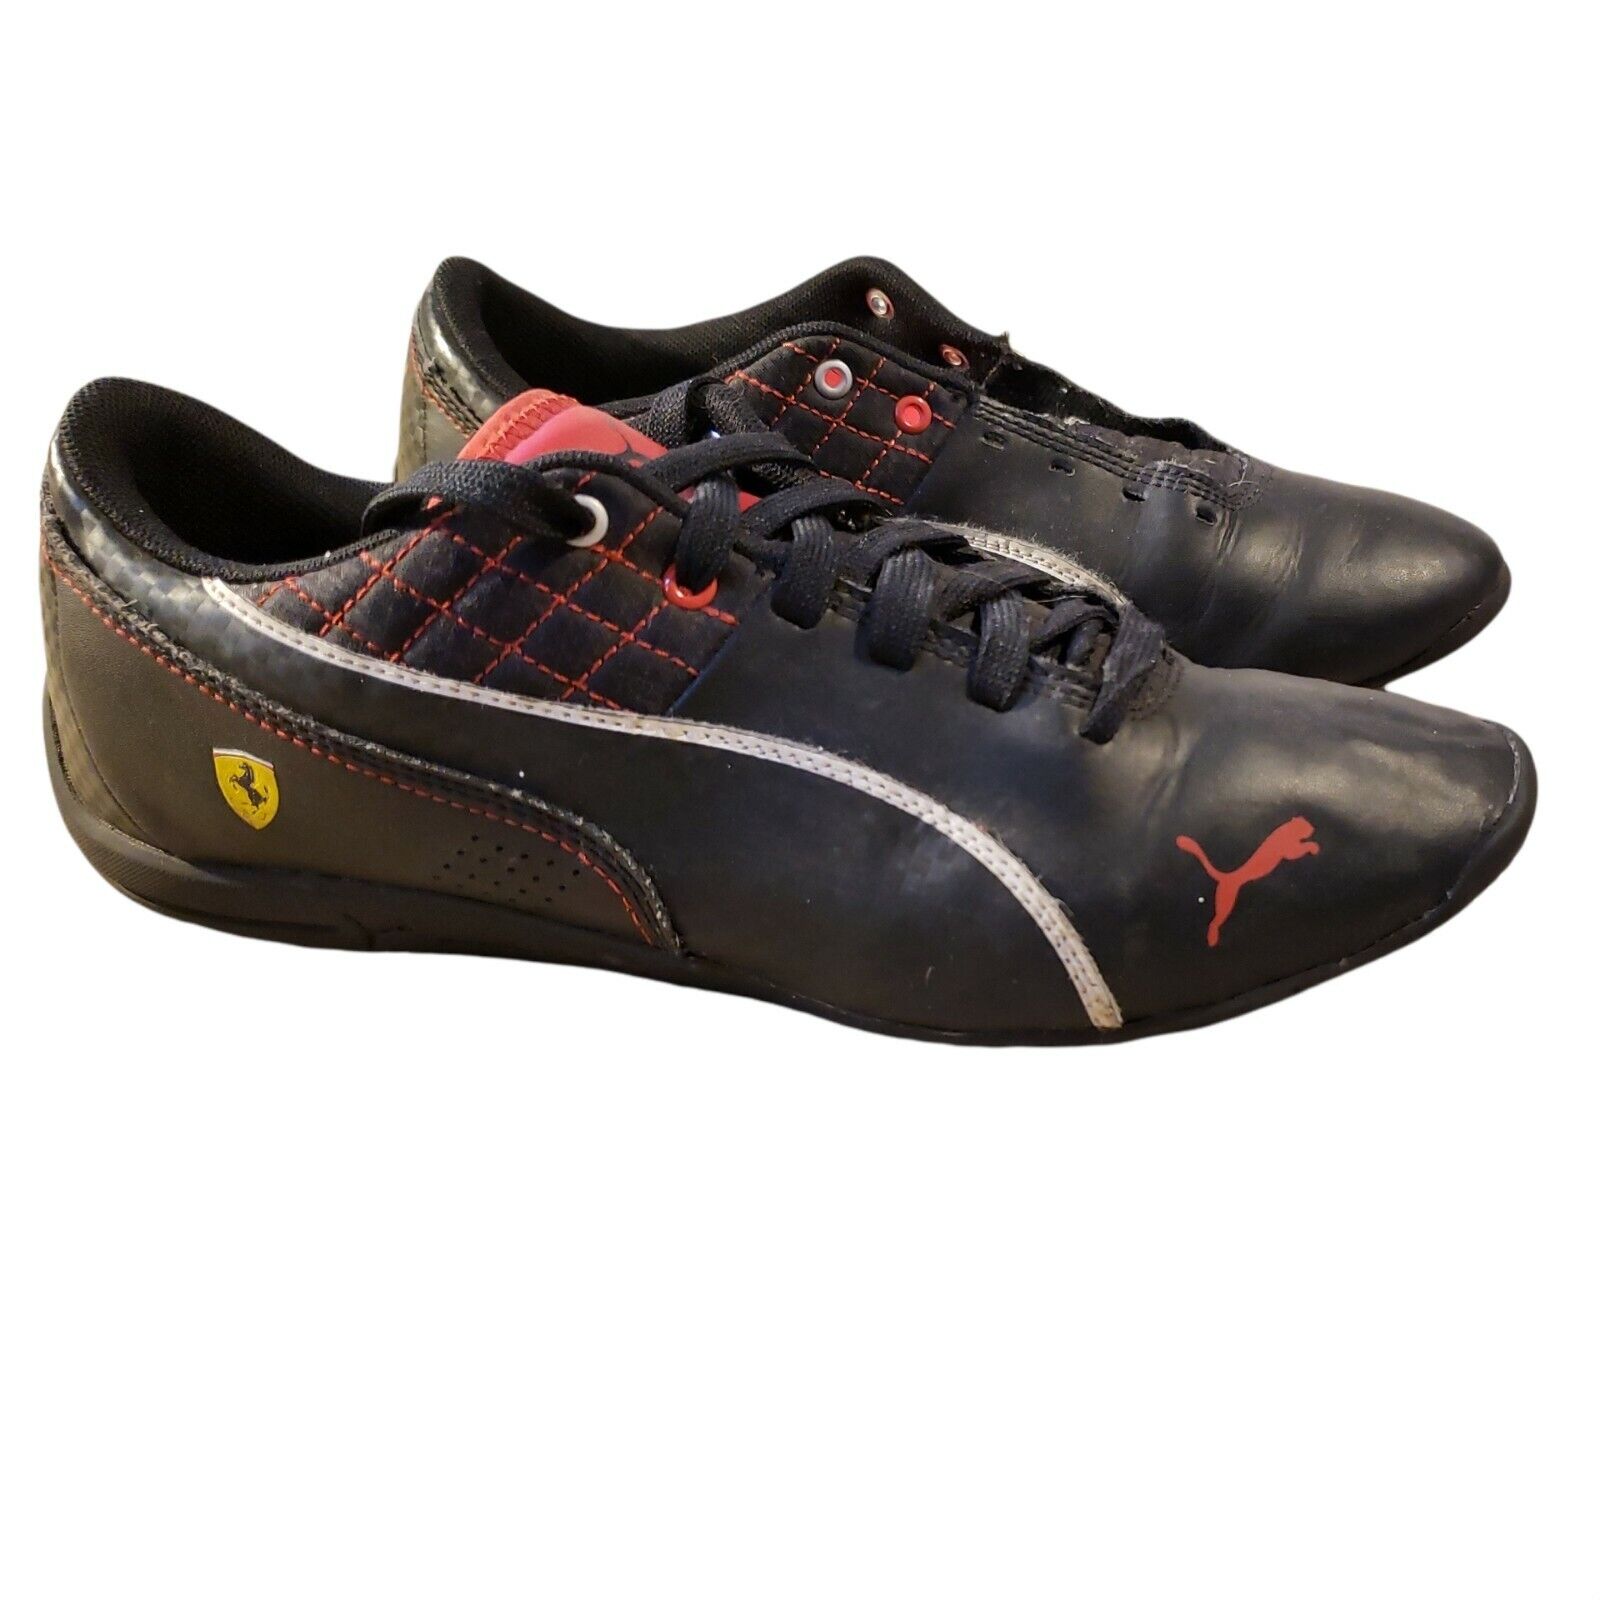 Puma x Ferrari Shoes Drift Cat 6 SF Size 6 Trainers | eBay